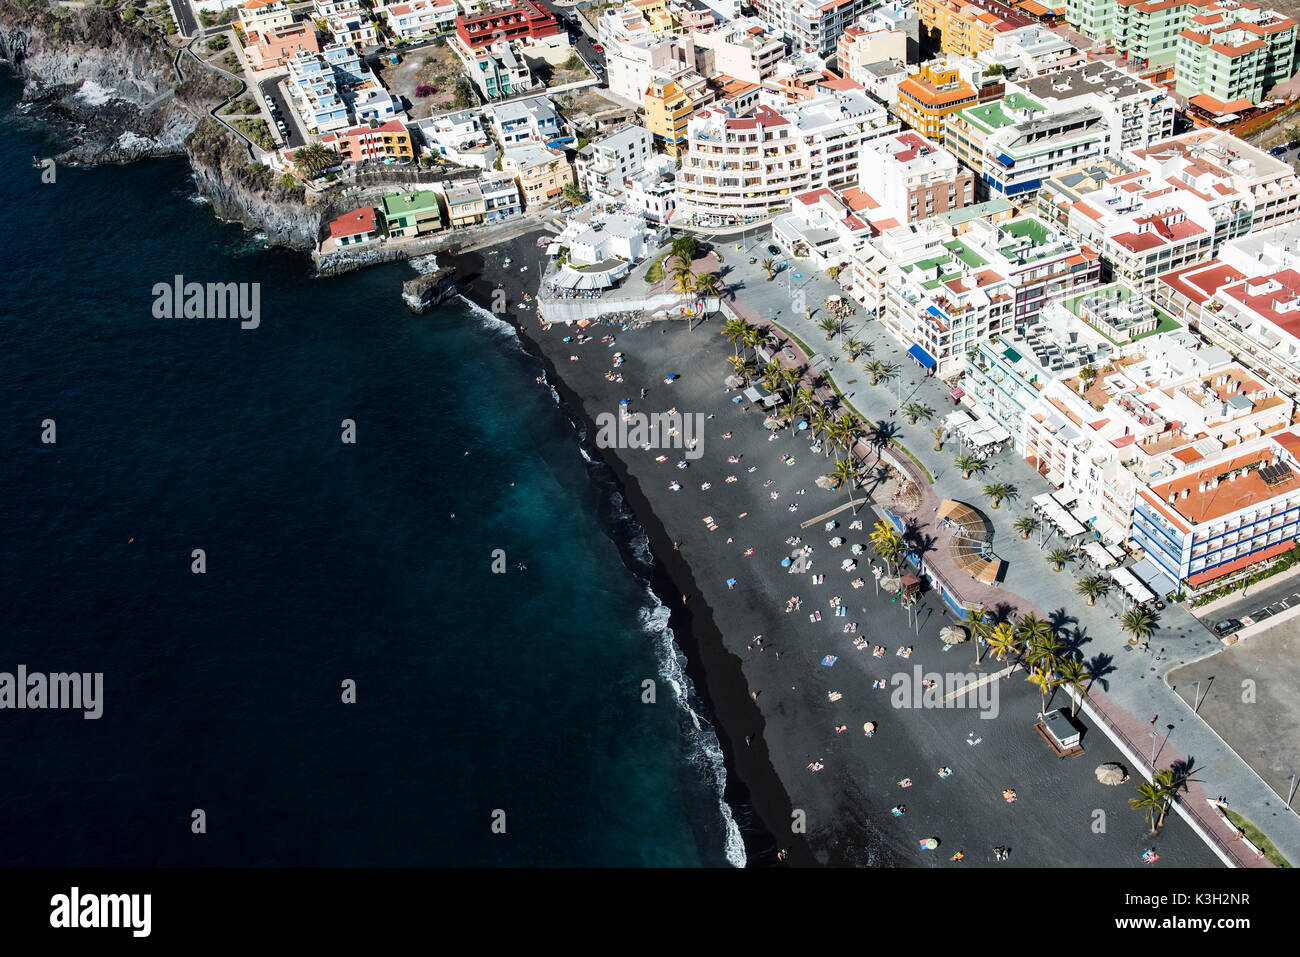 Puerto de Naos, Atlantic coast, volcano beach, beach, promenade close centre, aerial picture, island La Palma, the Canaries, Spain Stock Photo